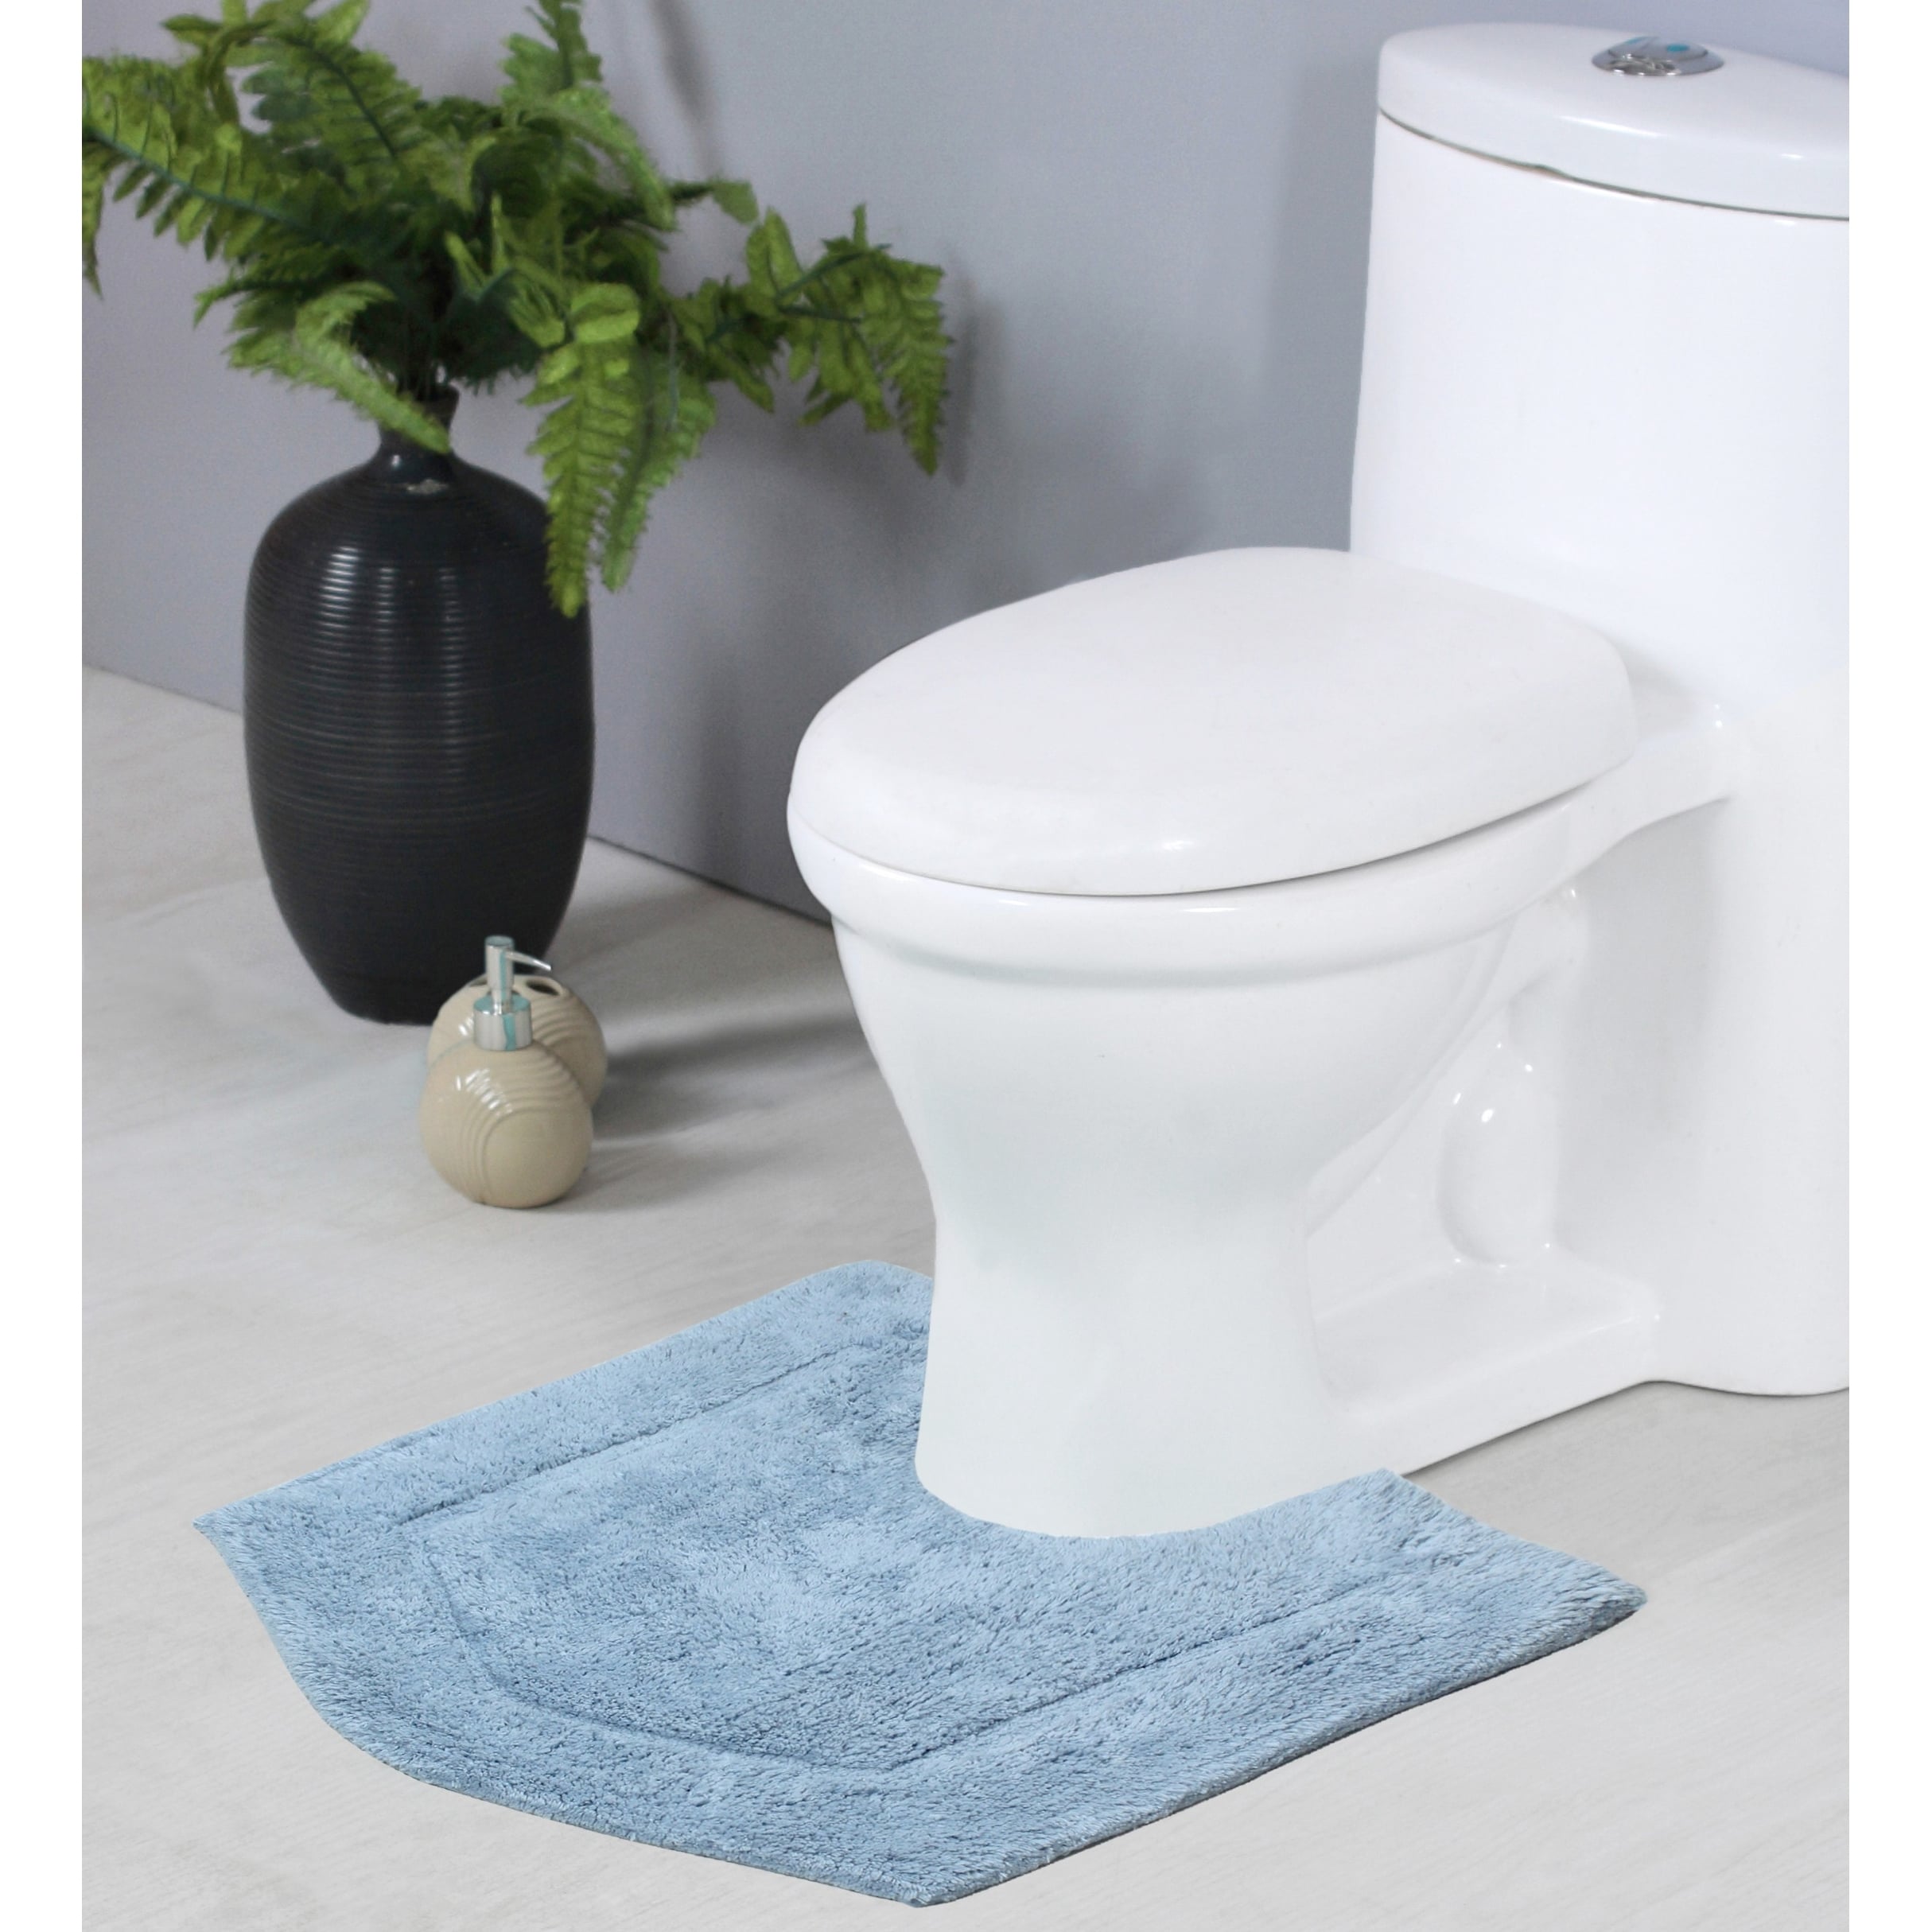 Terry Cloth Bath Mat Washable Bathroom Carpet Absorbent Terrycloth Bath Rug  